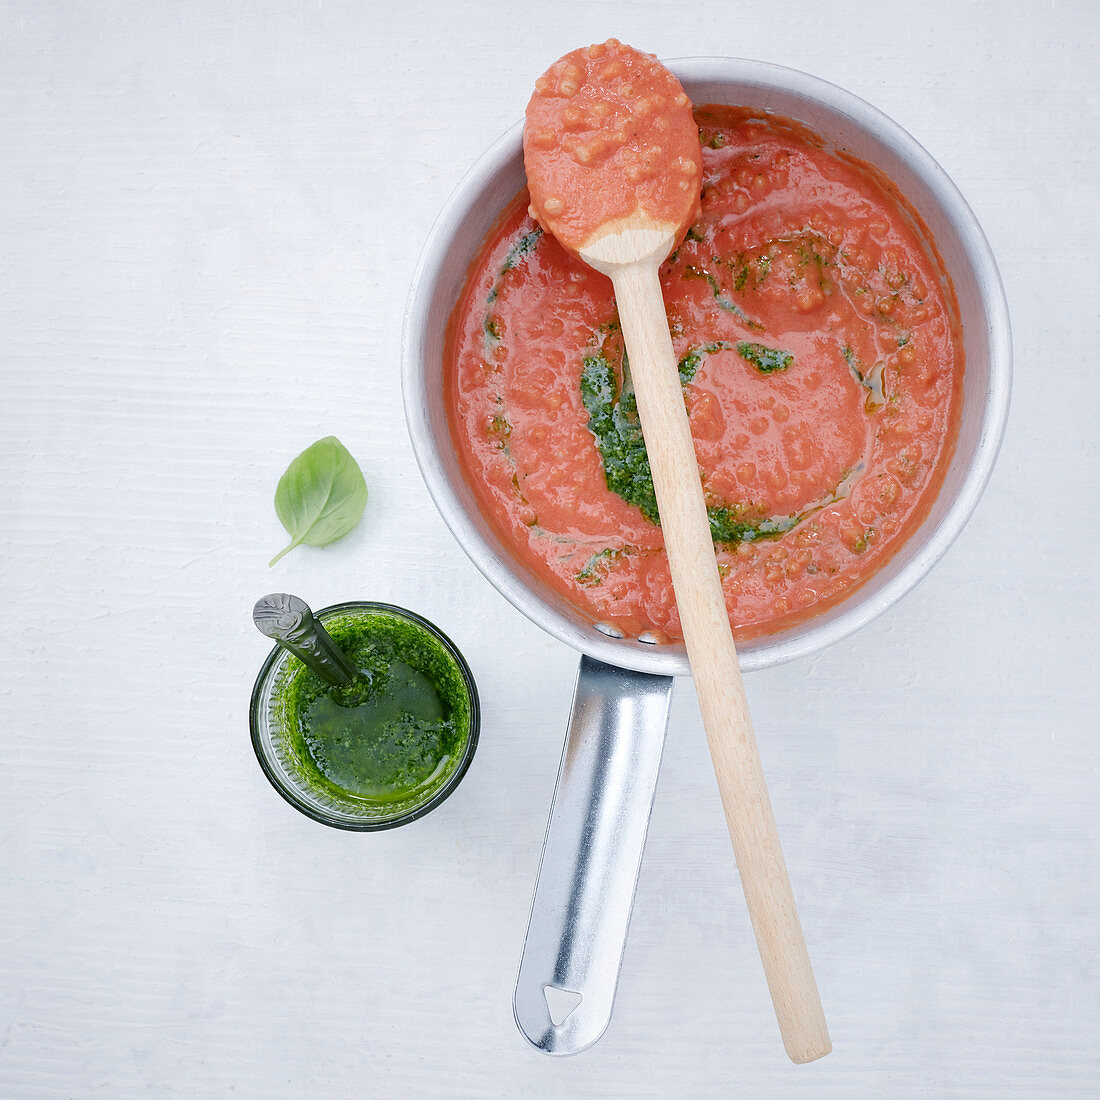 Tomato and barley soup with pesto